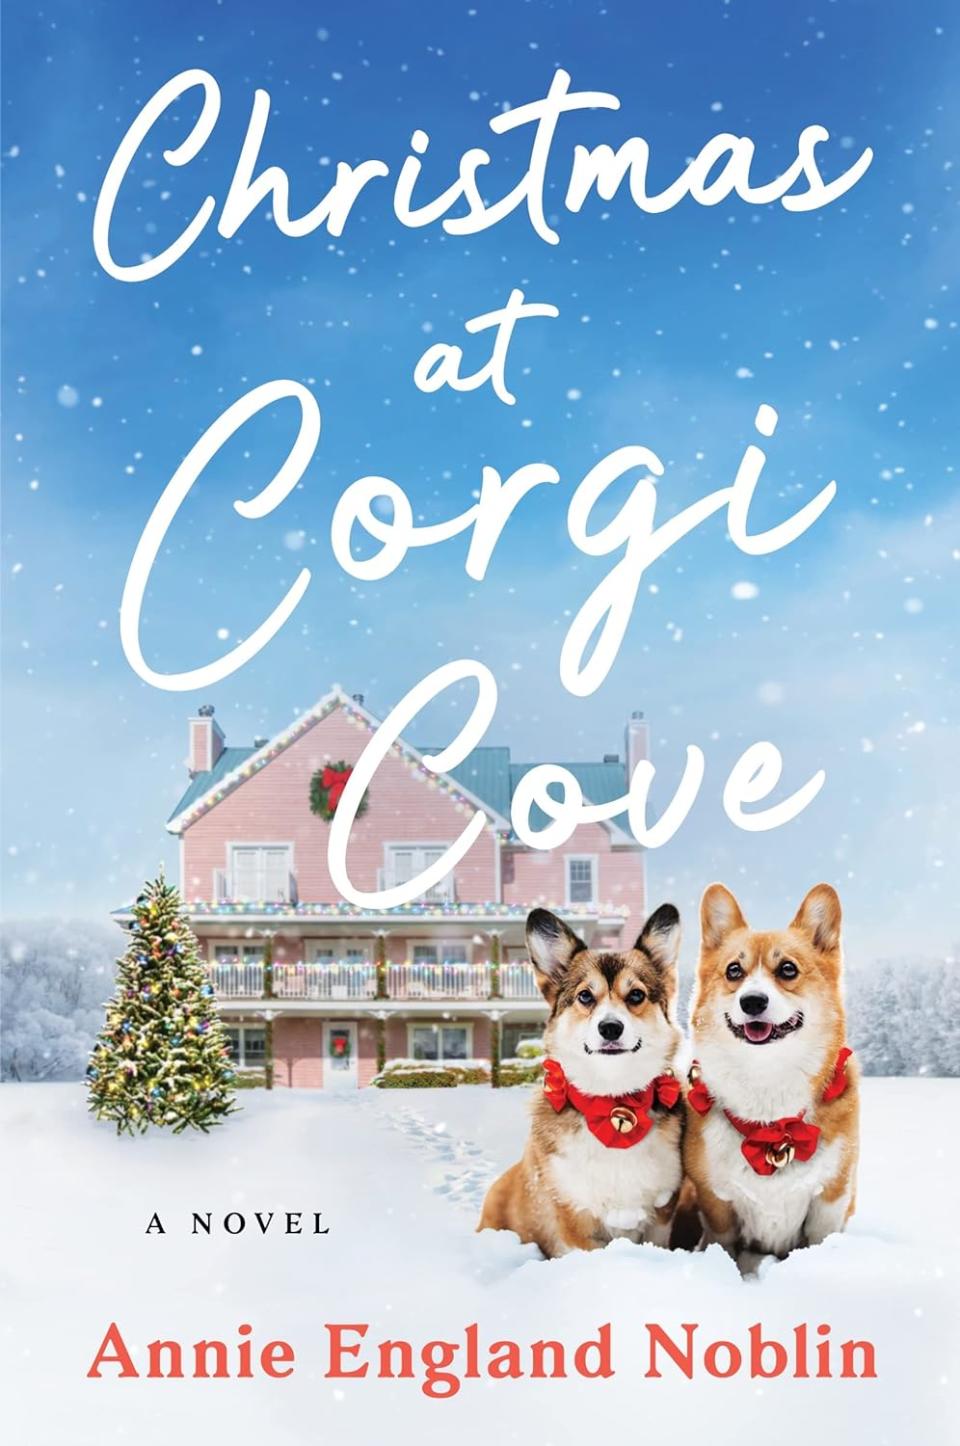 Christmas at Corgi Cove by Annie England Noblin (WW Book Club)